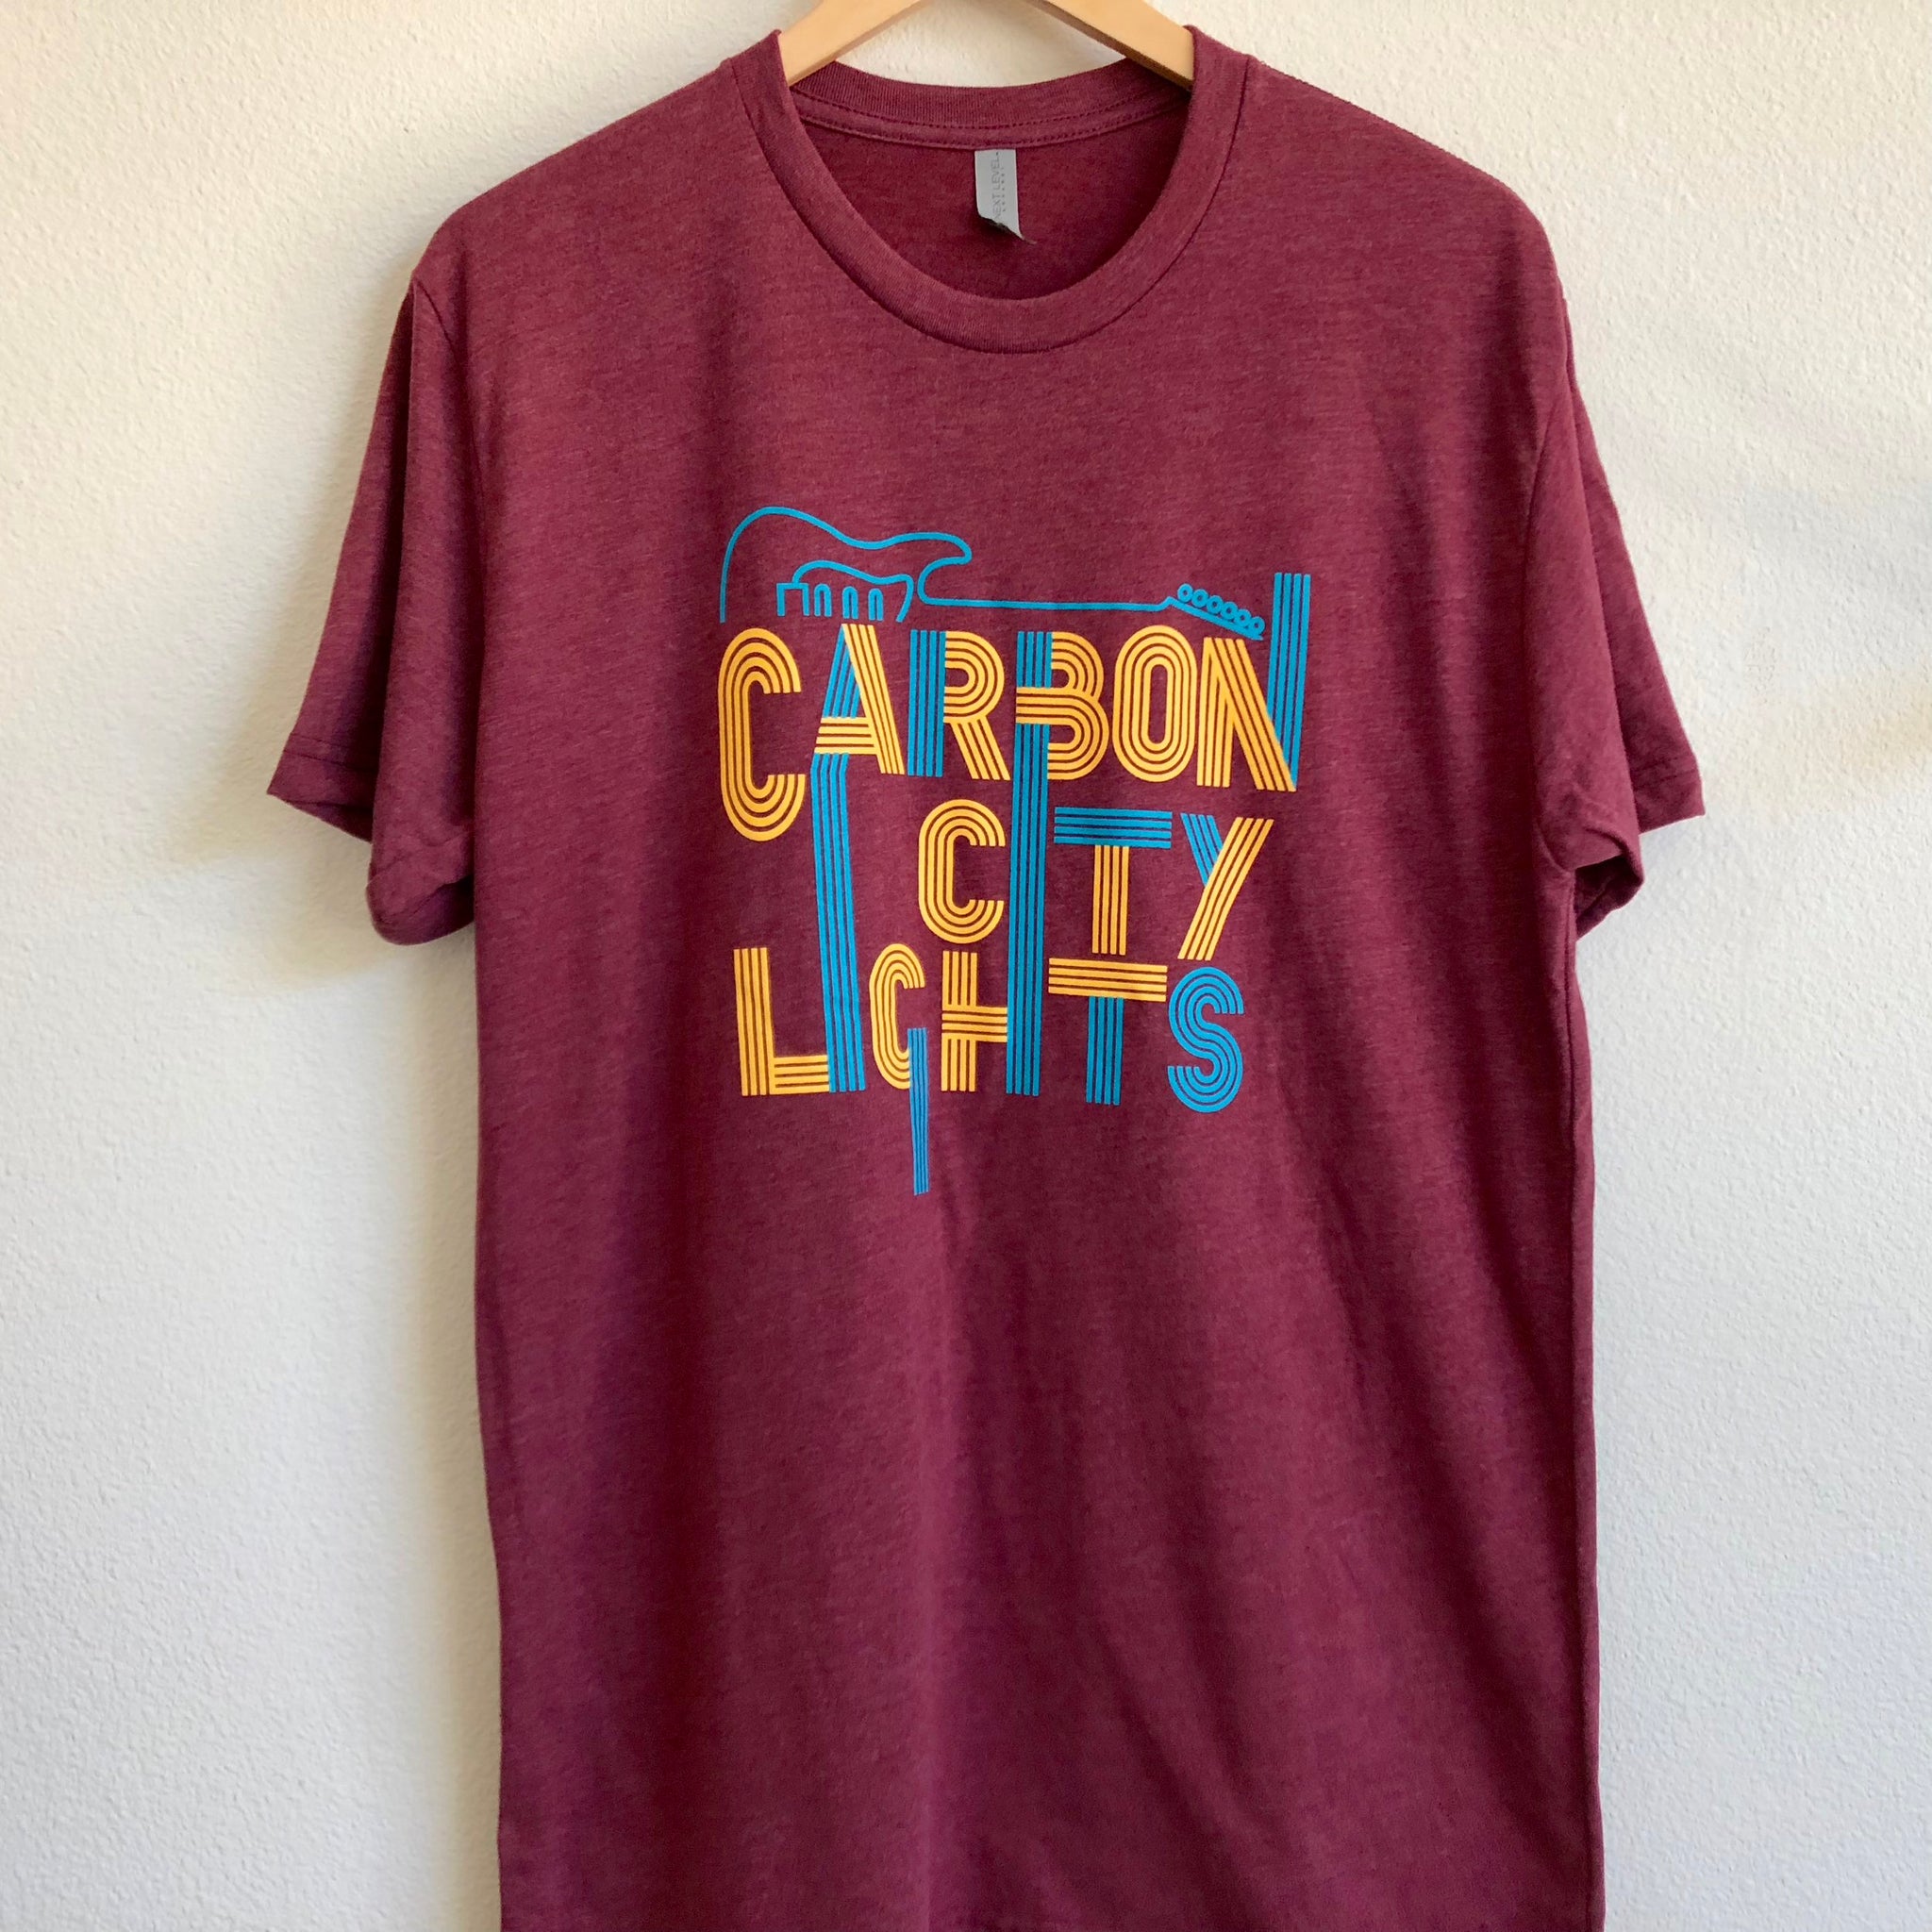 Men's Maroon T-Shirt - Carbon City Lights